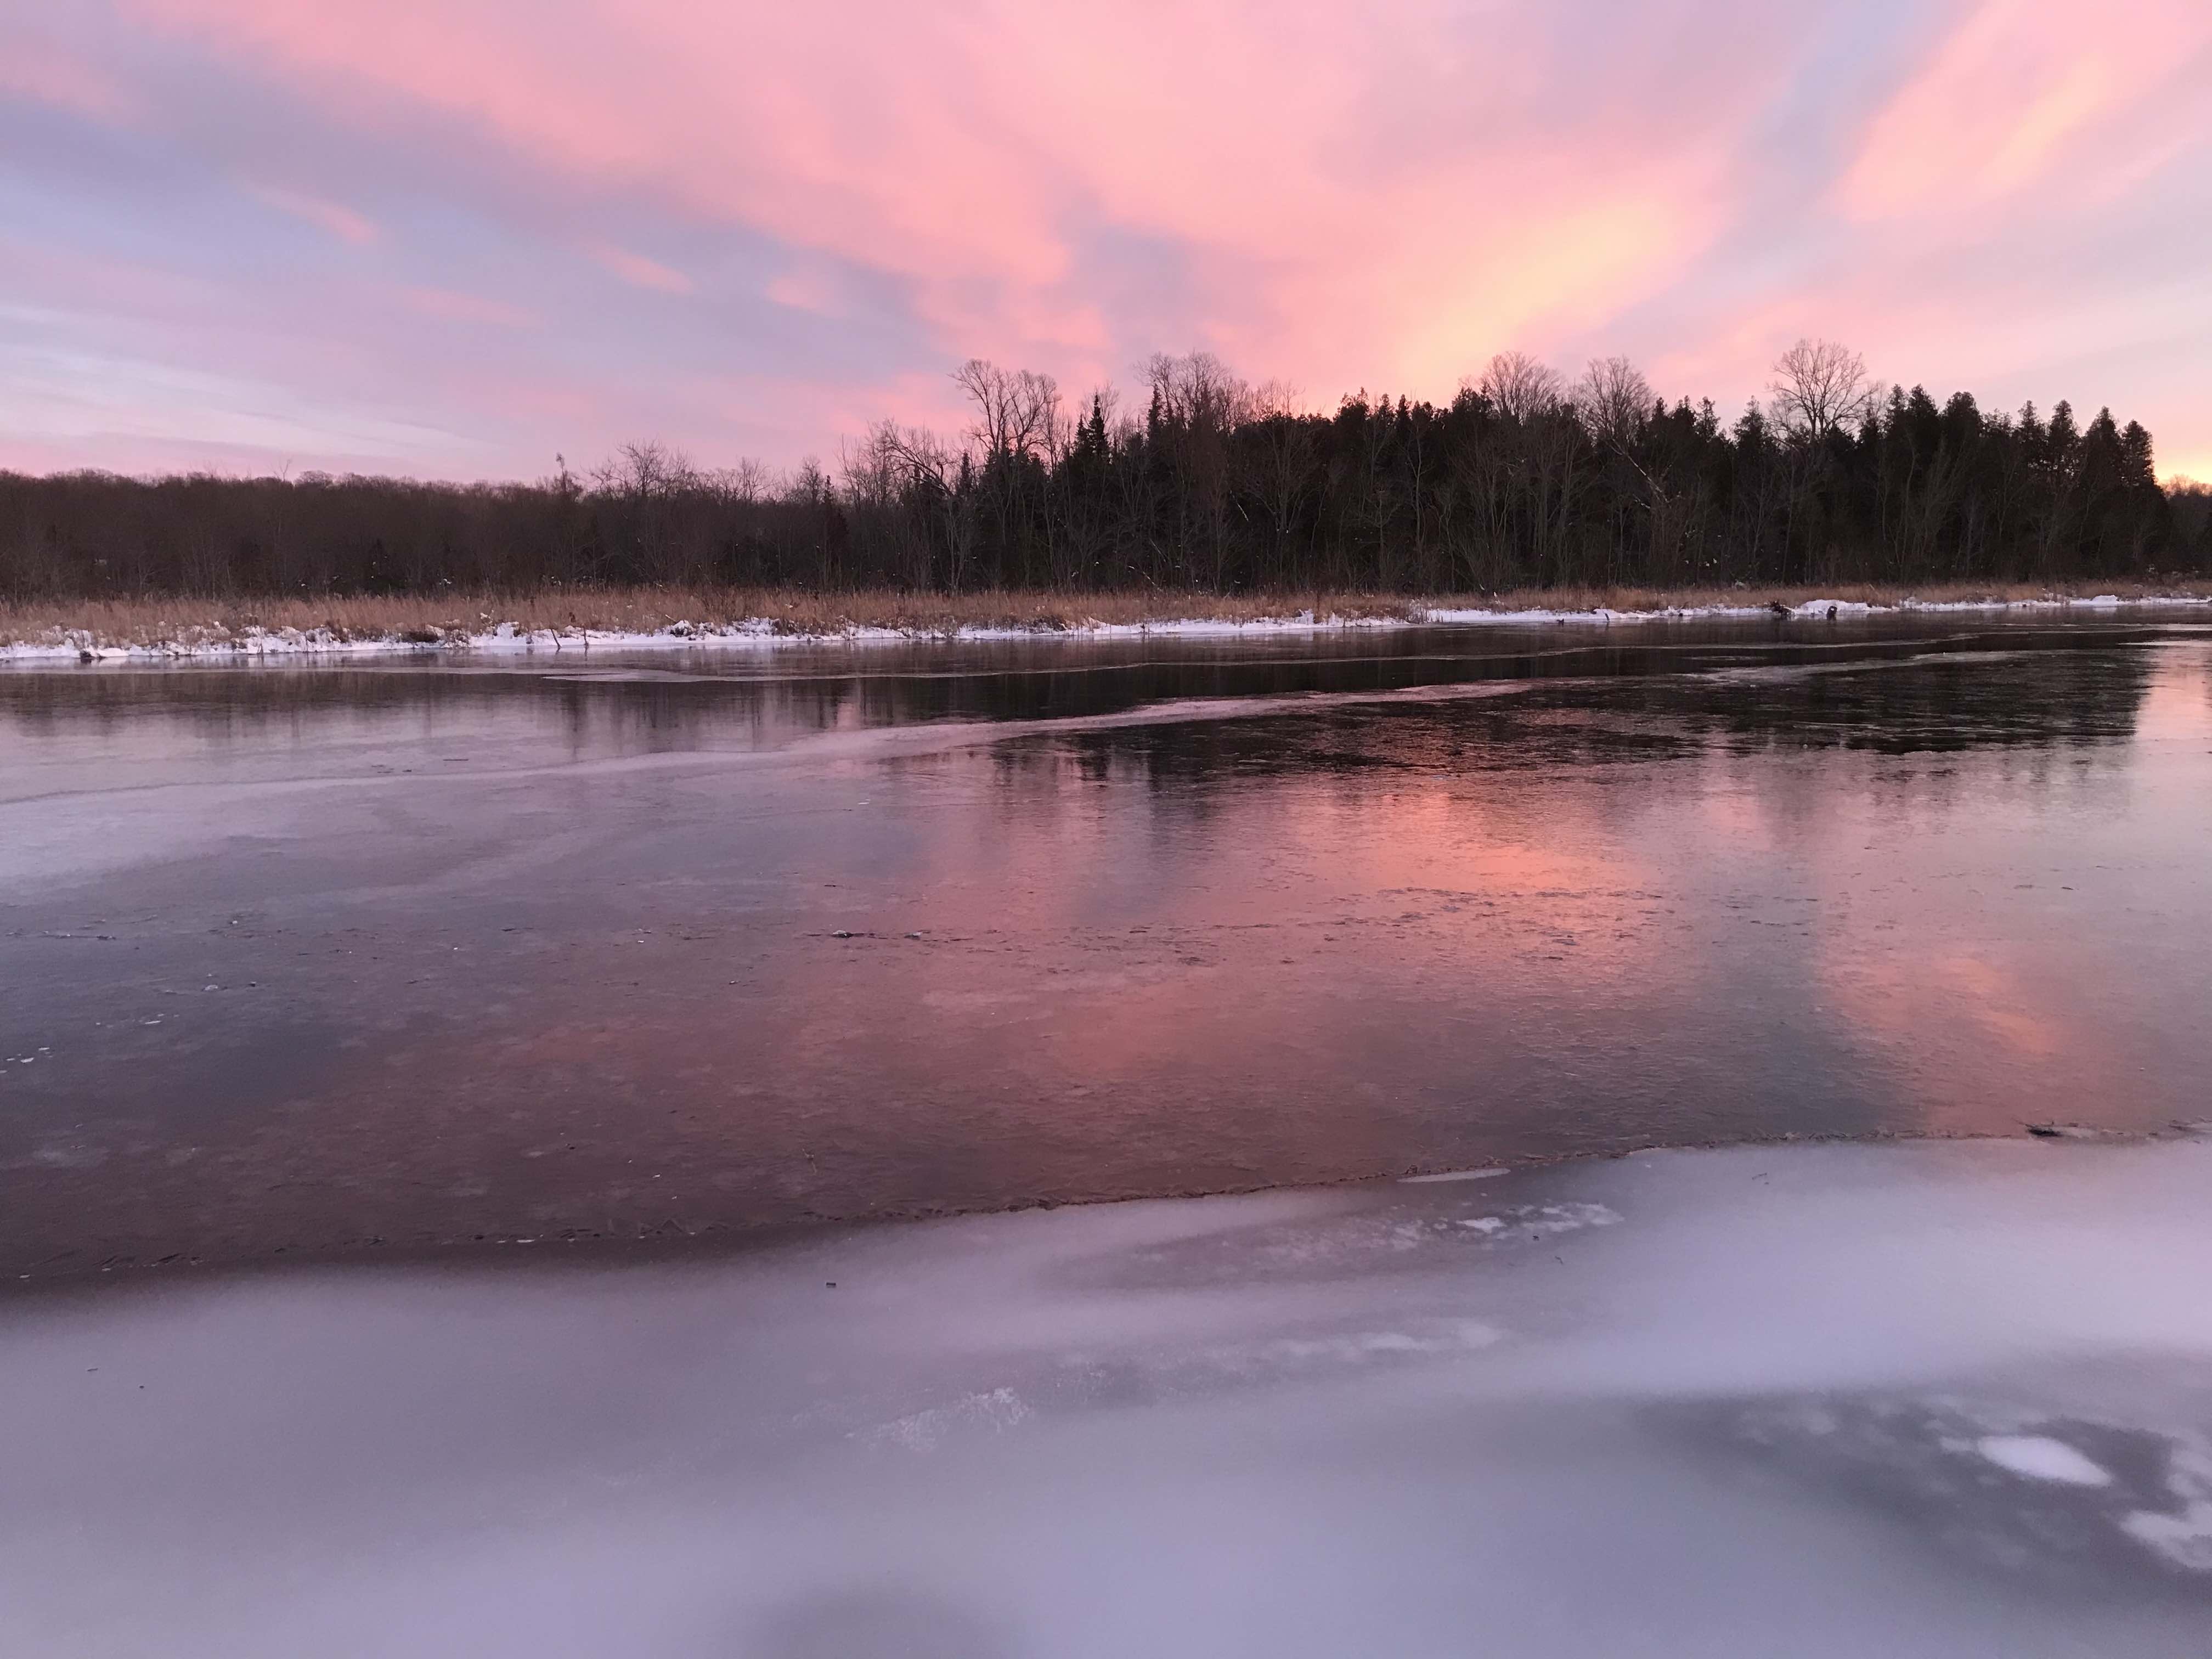 Sunrise over a frozen river